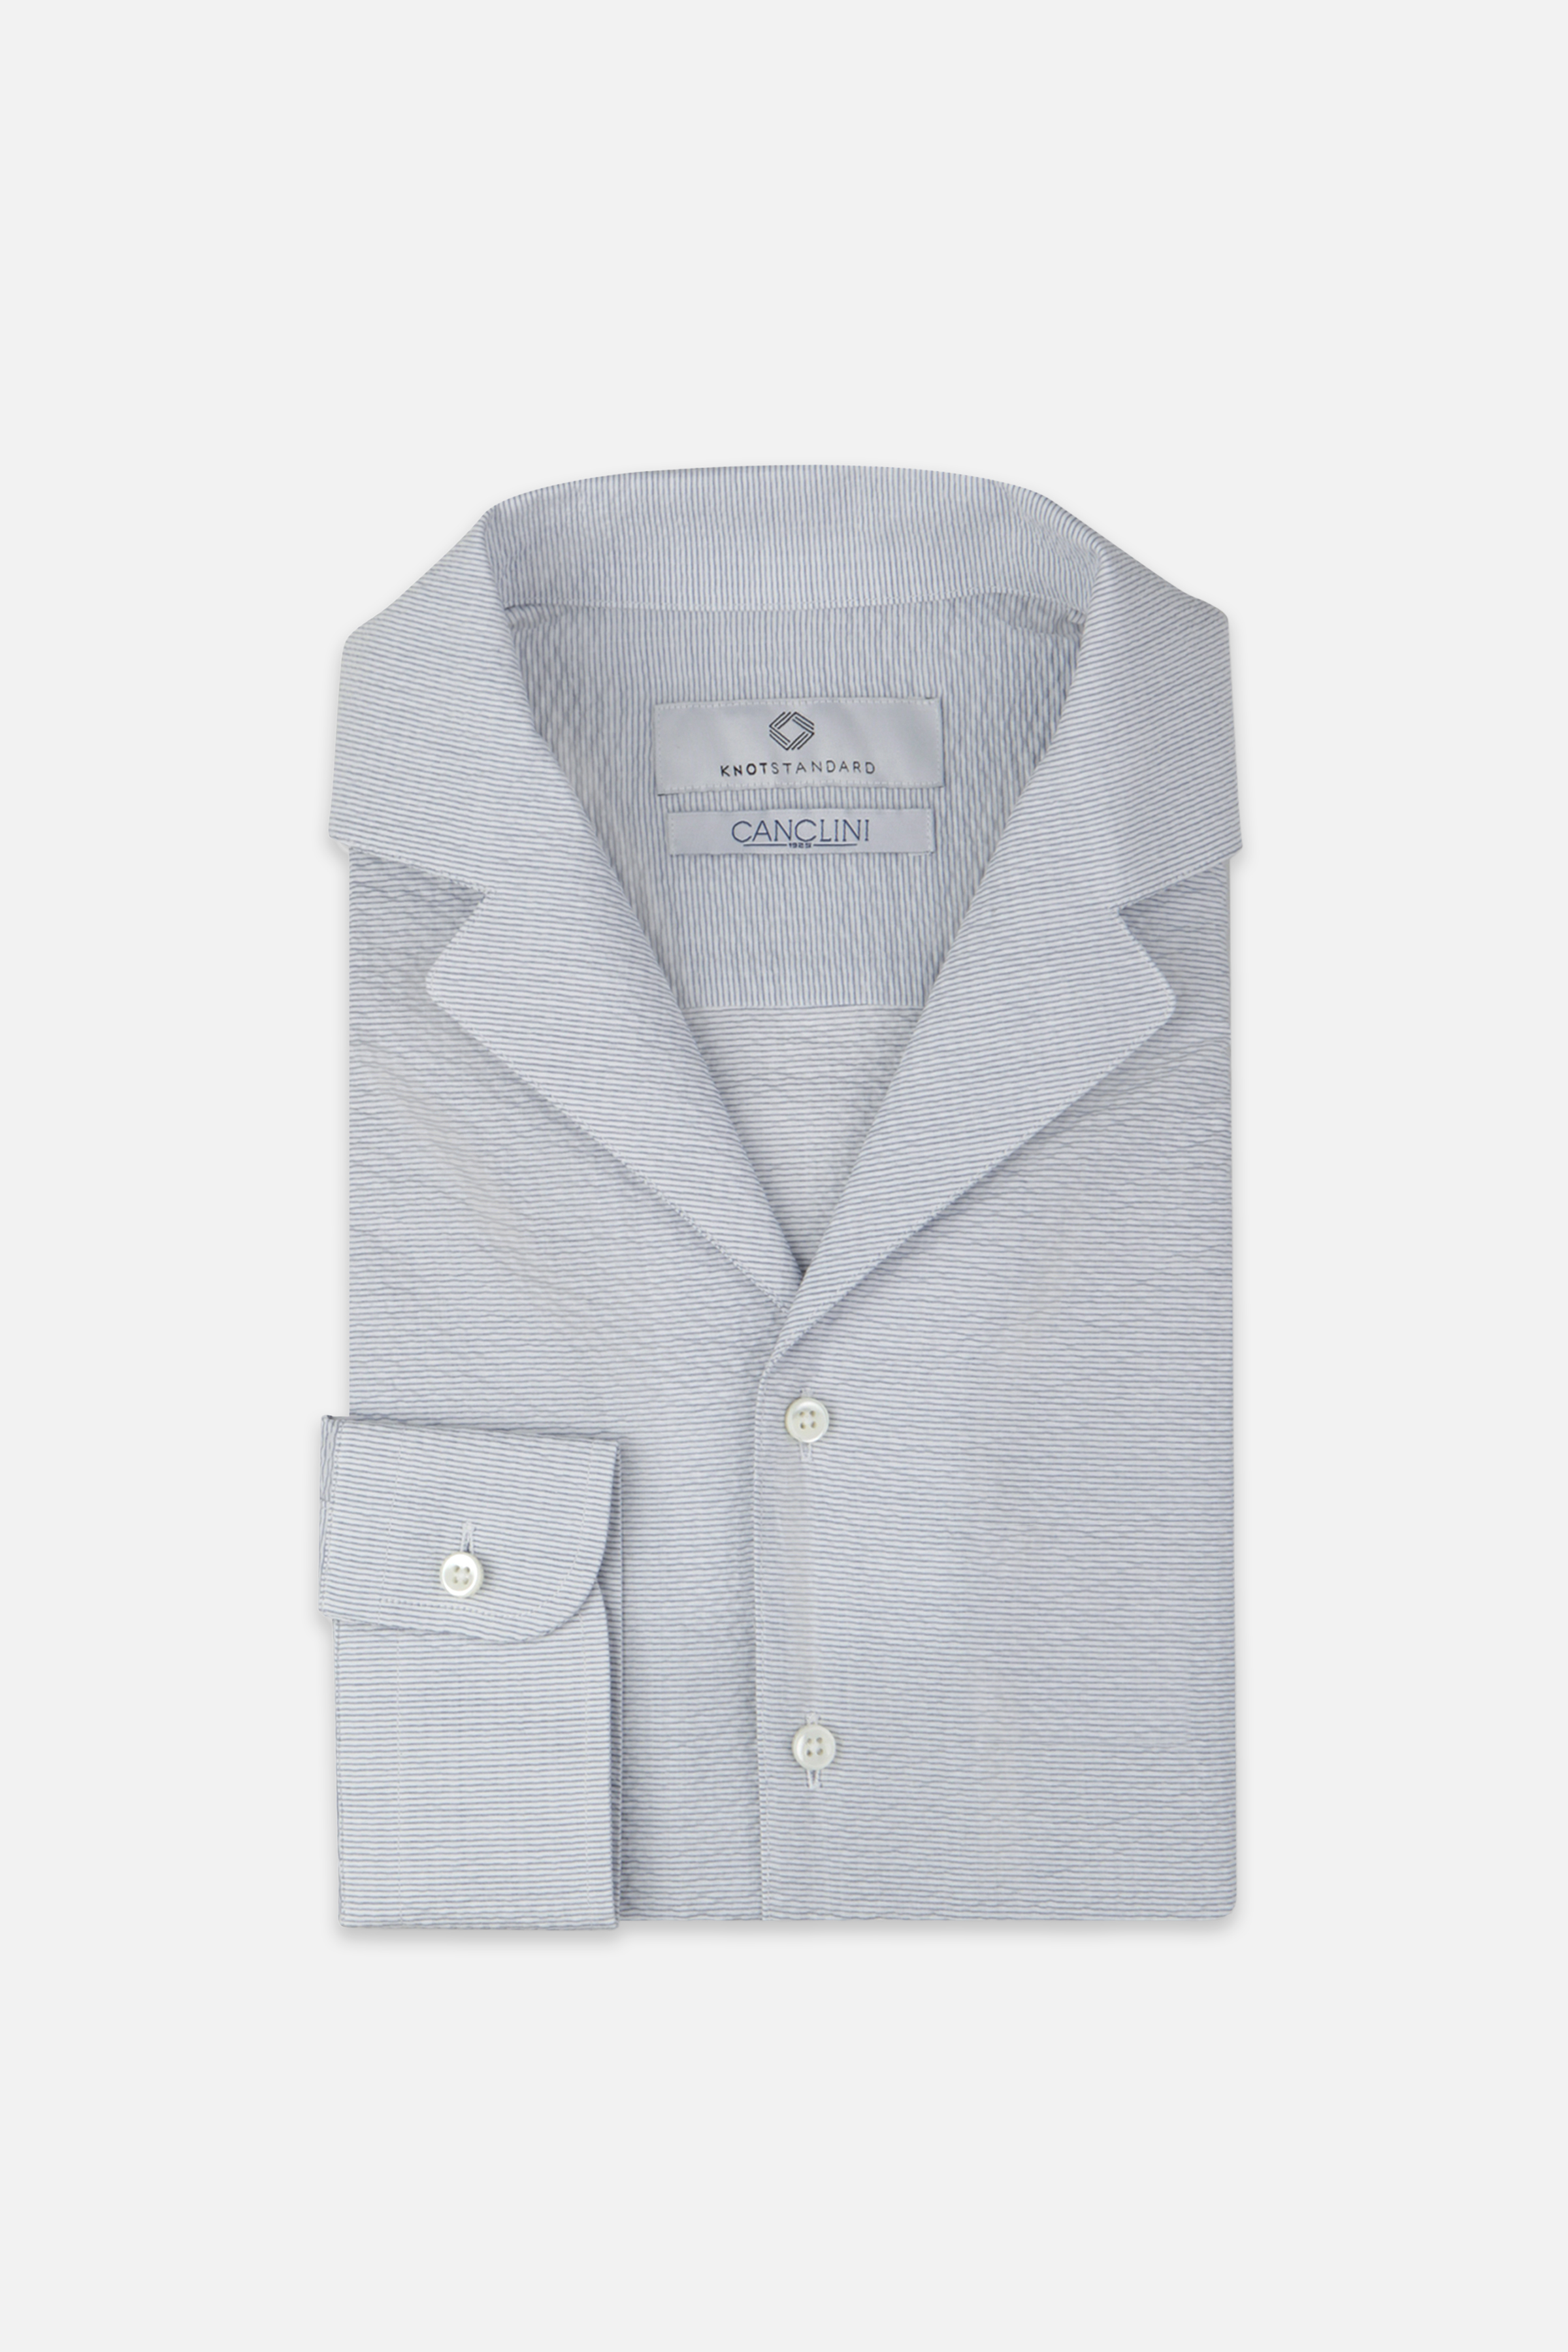 Canclini Seersucker Horizontal Striped Shirt by Knot Standard